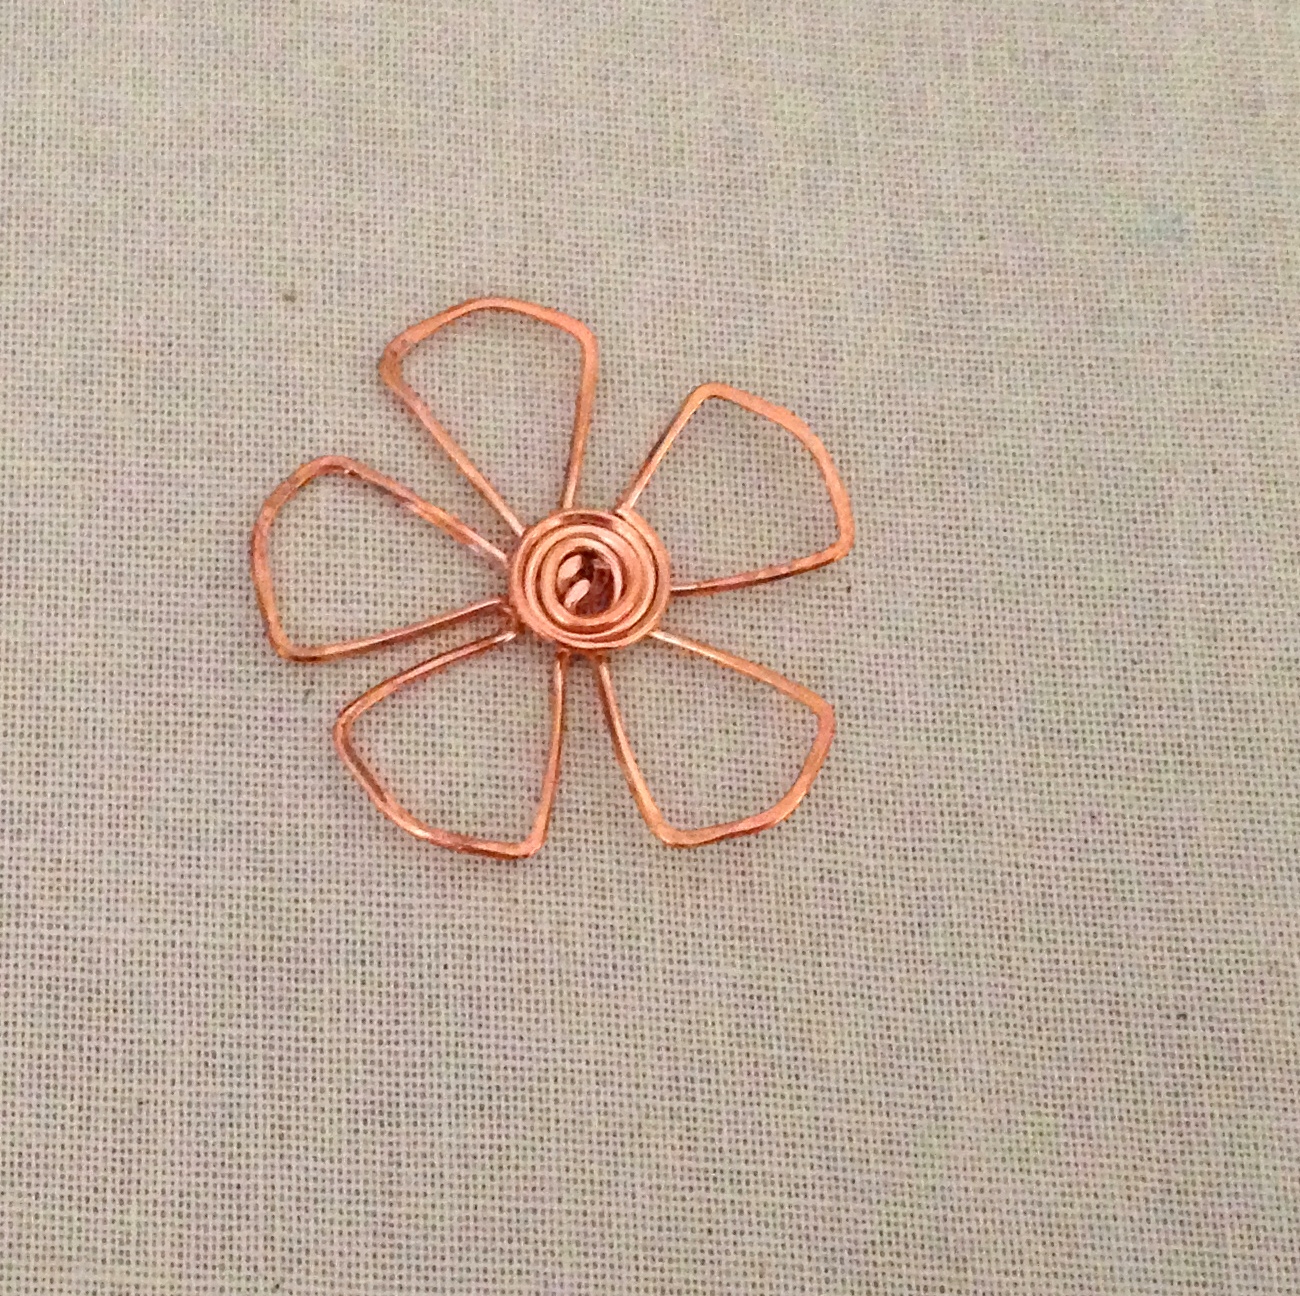 Copper Wire Flower by Lisa Yang Jewelry, Free Tutorial, DIY